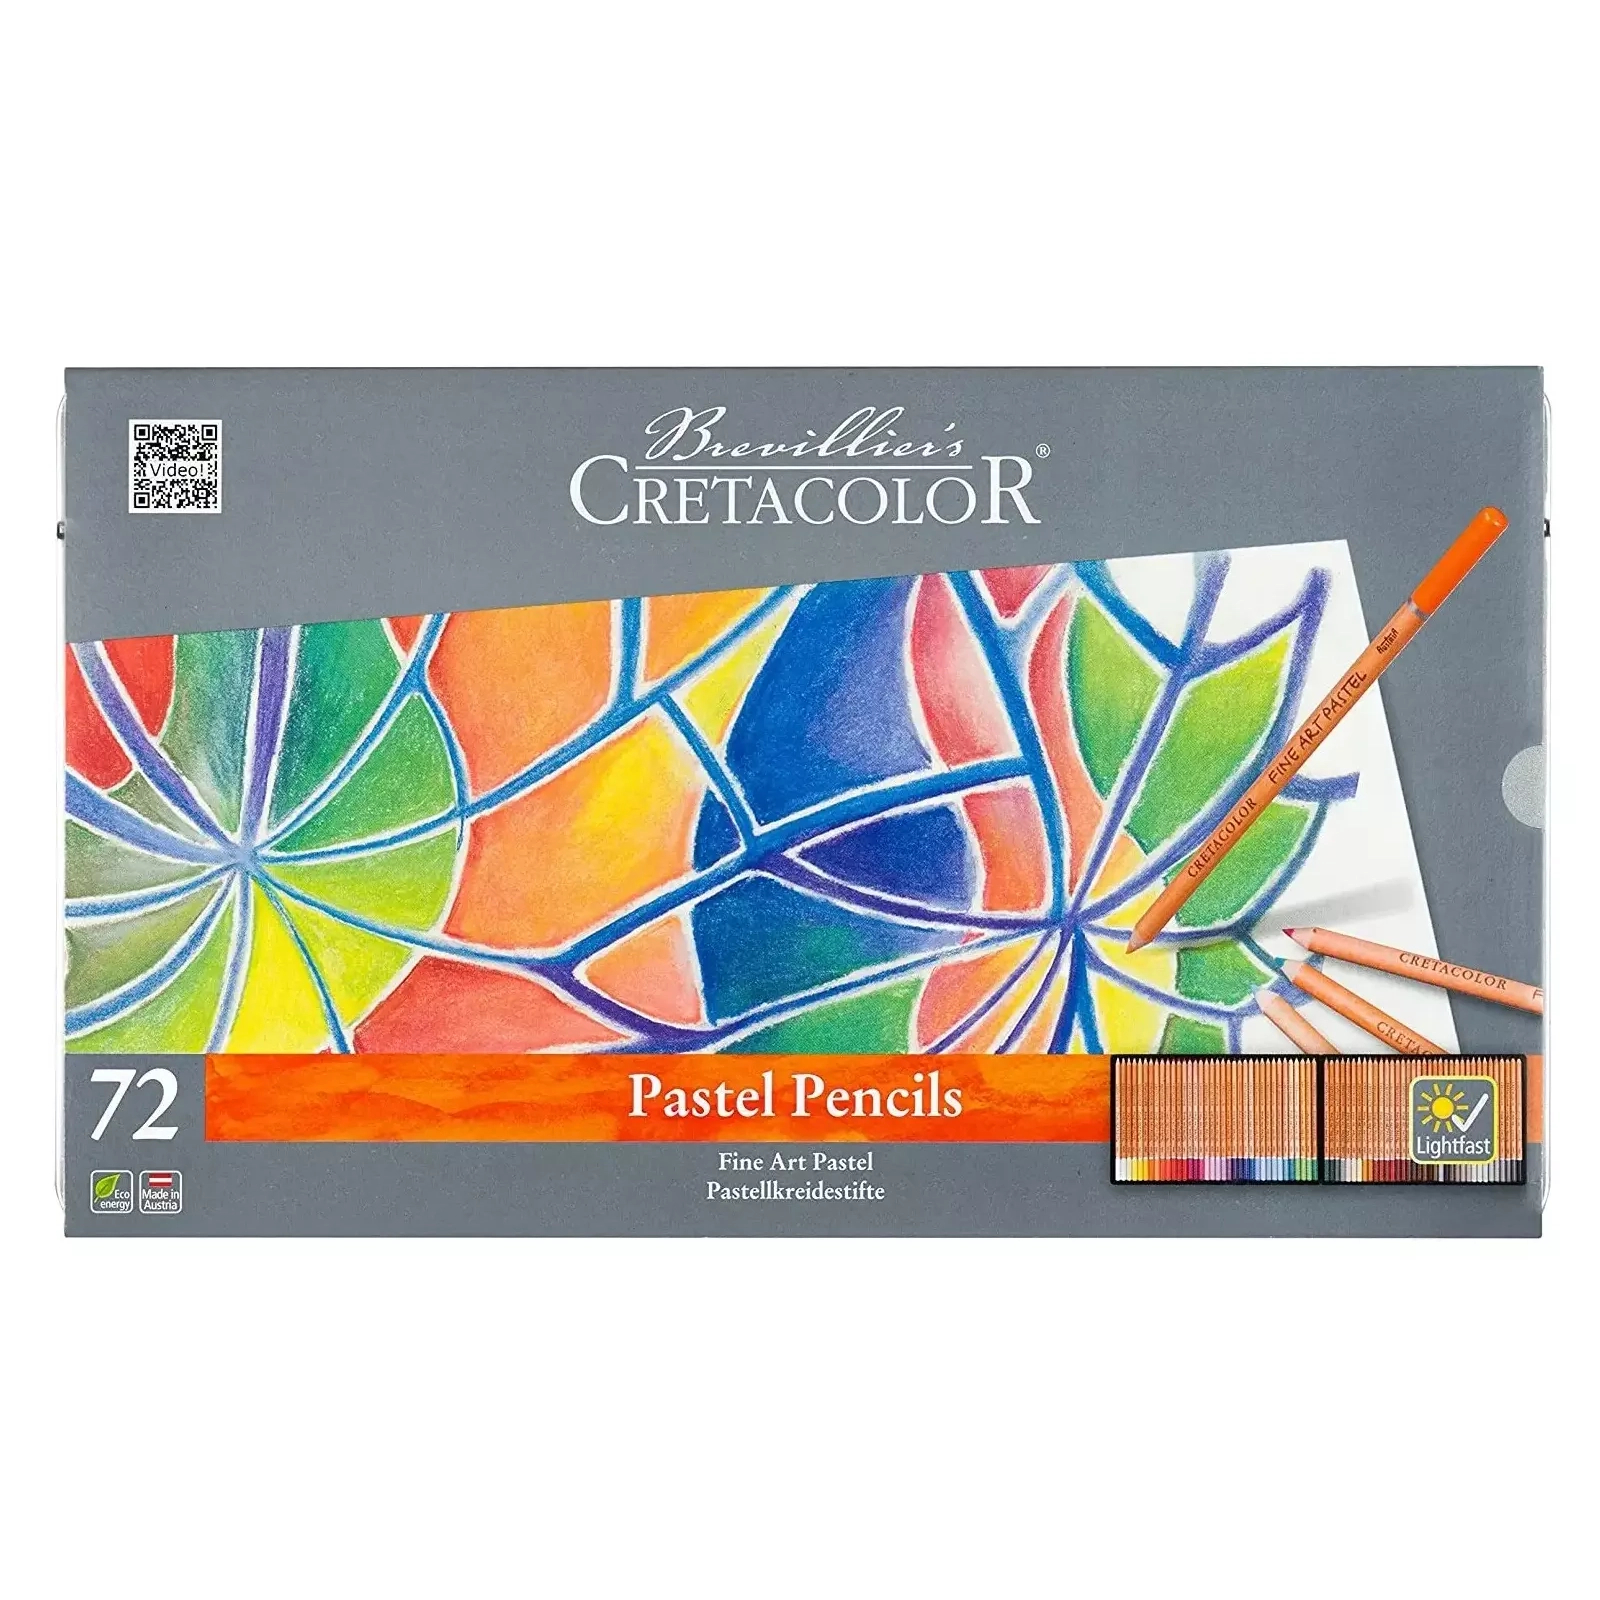 Пастель Cretacolor Fine Art Pastel олівці 72 кольори (9002592470729)